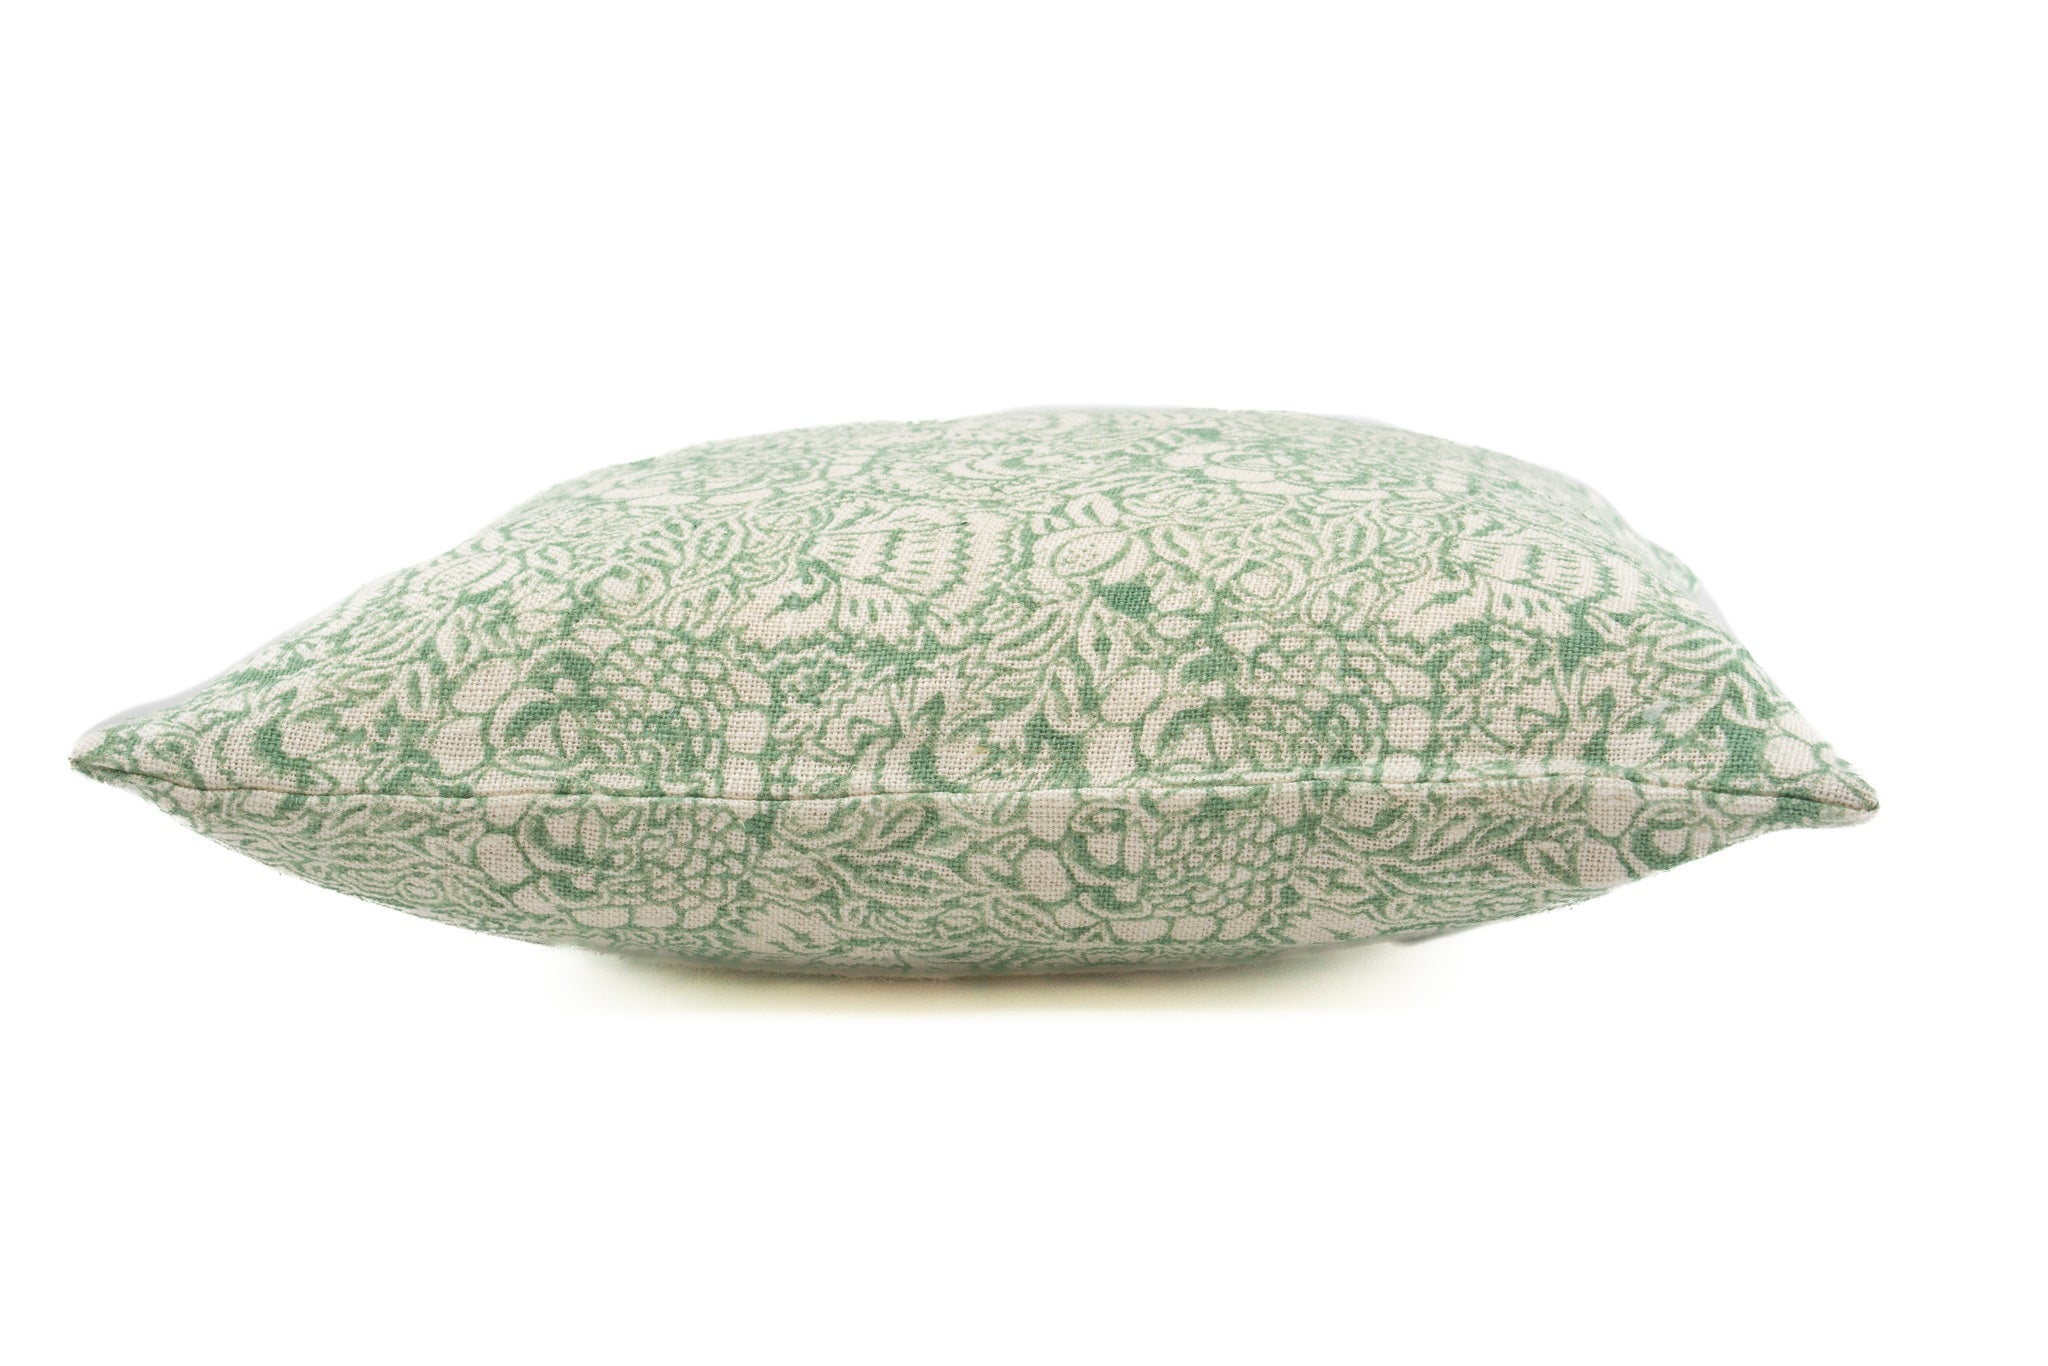 Pillow: Hand block printed linen, Heritage print - P418